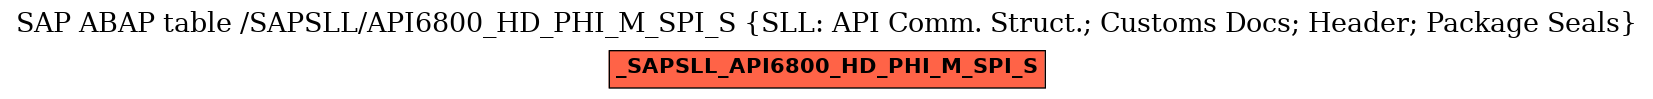 E-R Diagram for table /SAPSLL/API6800_HD_PHI_M_SPI_S (SLL: API Comm. Struct.; Customs Docs; Header; Package Seals)